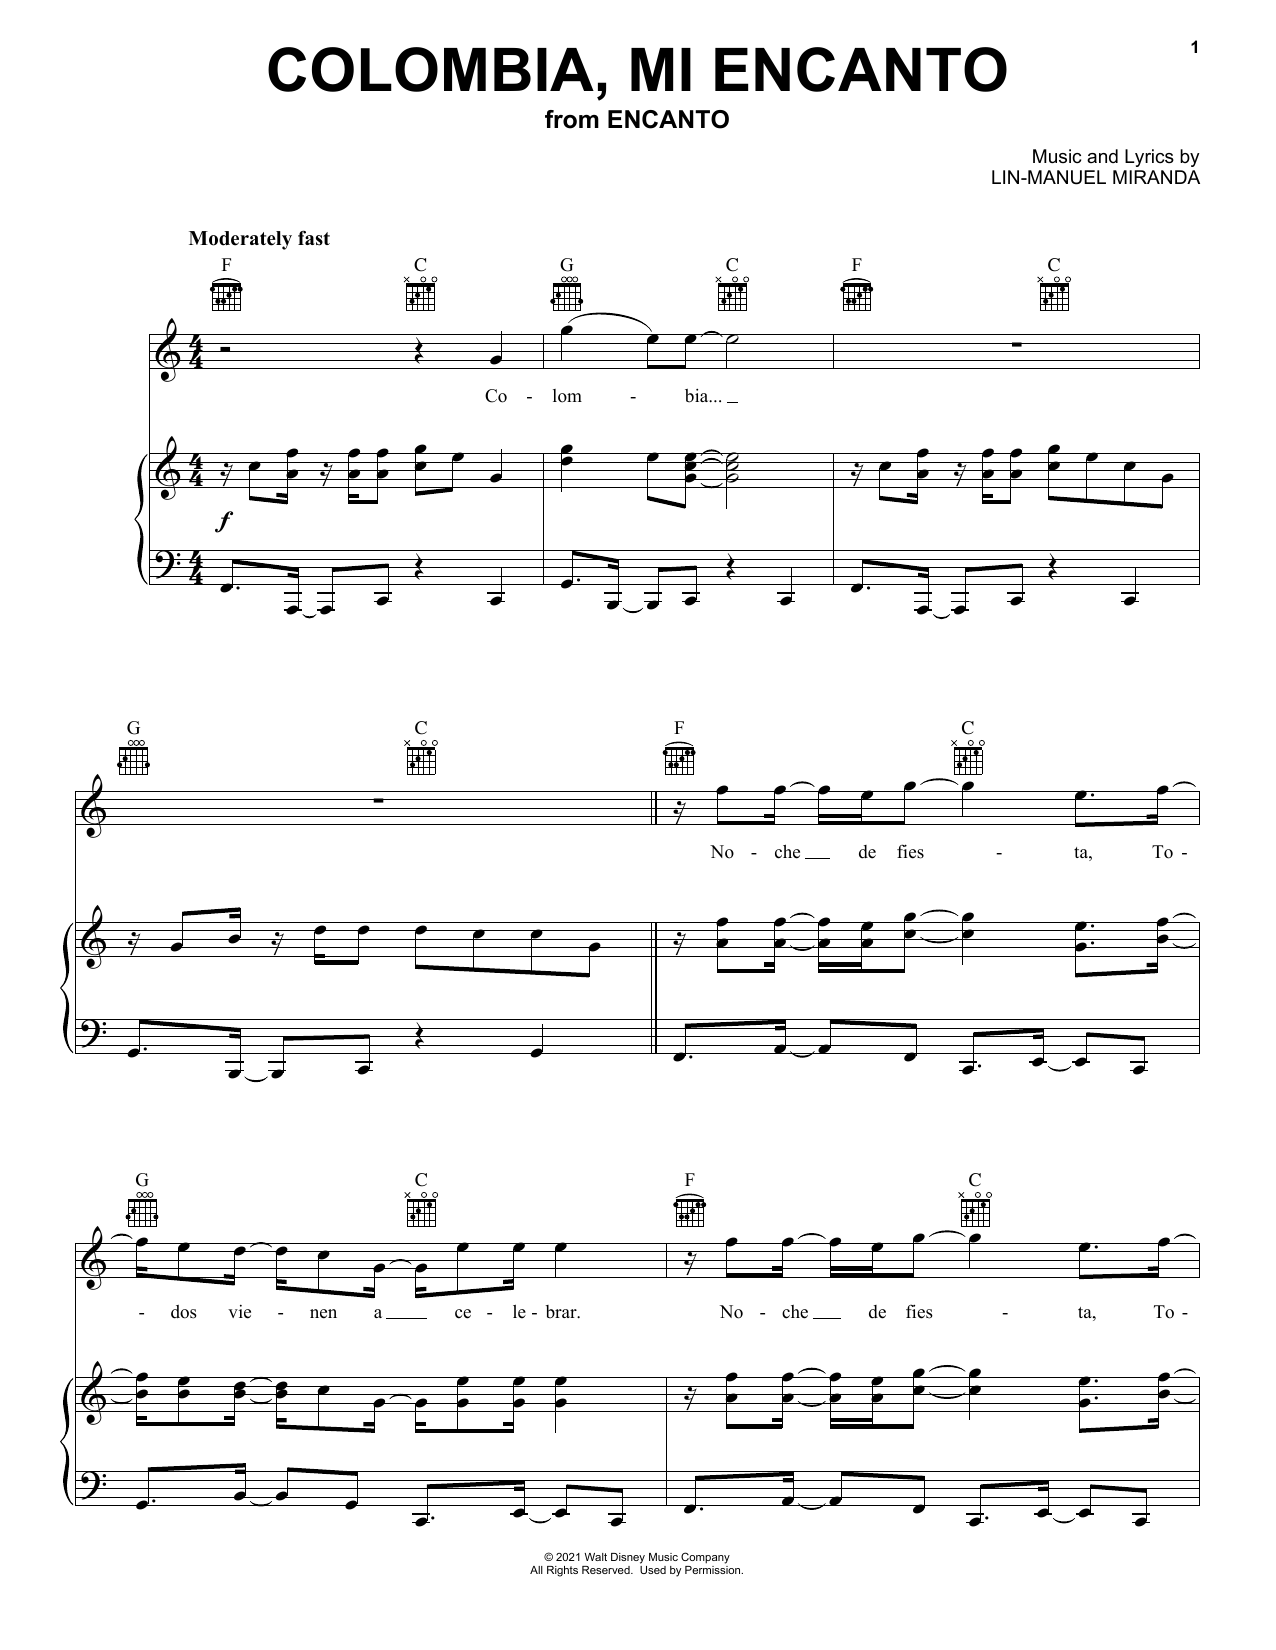 Lin-Manuel Miranda Colombia, Mi Encanto (from Encanto) Sheet Music Notes & Chords for Cello Solo - Download or Print PDF